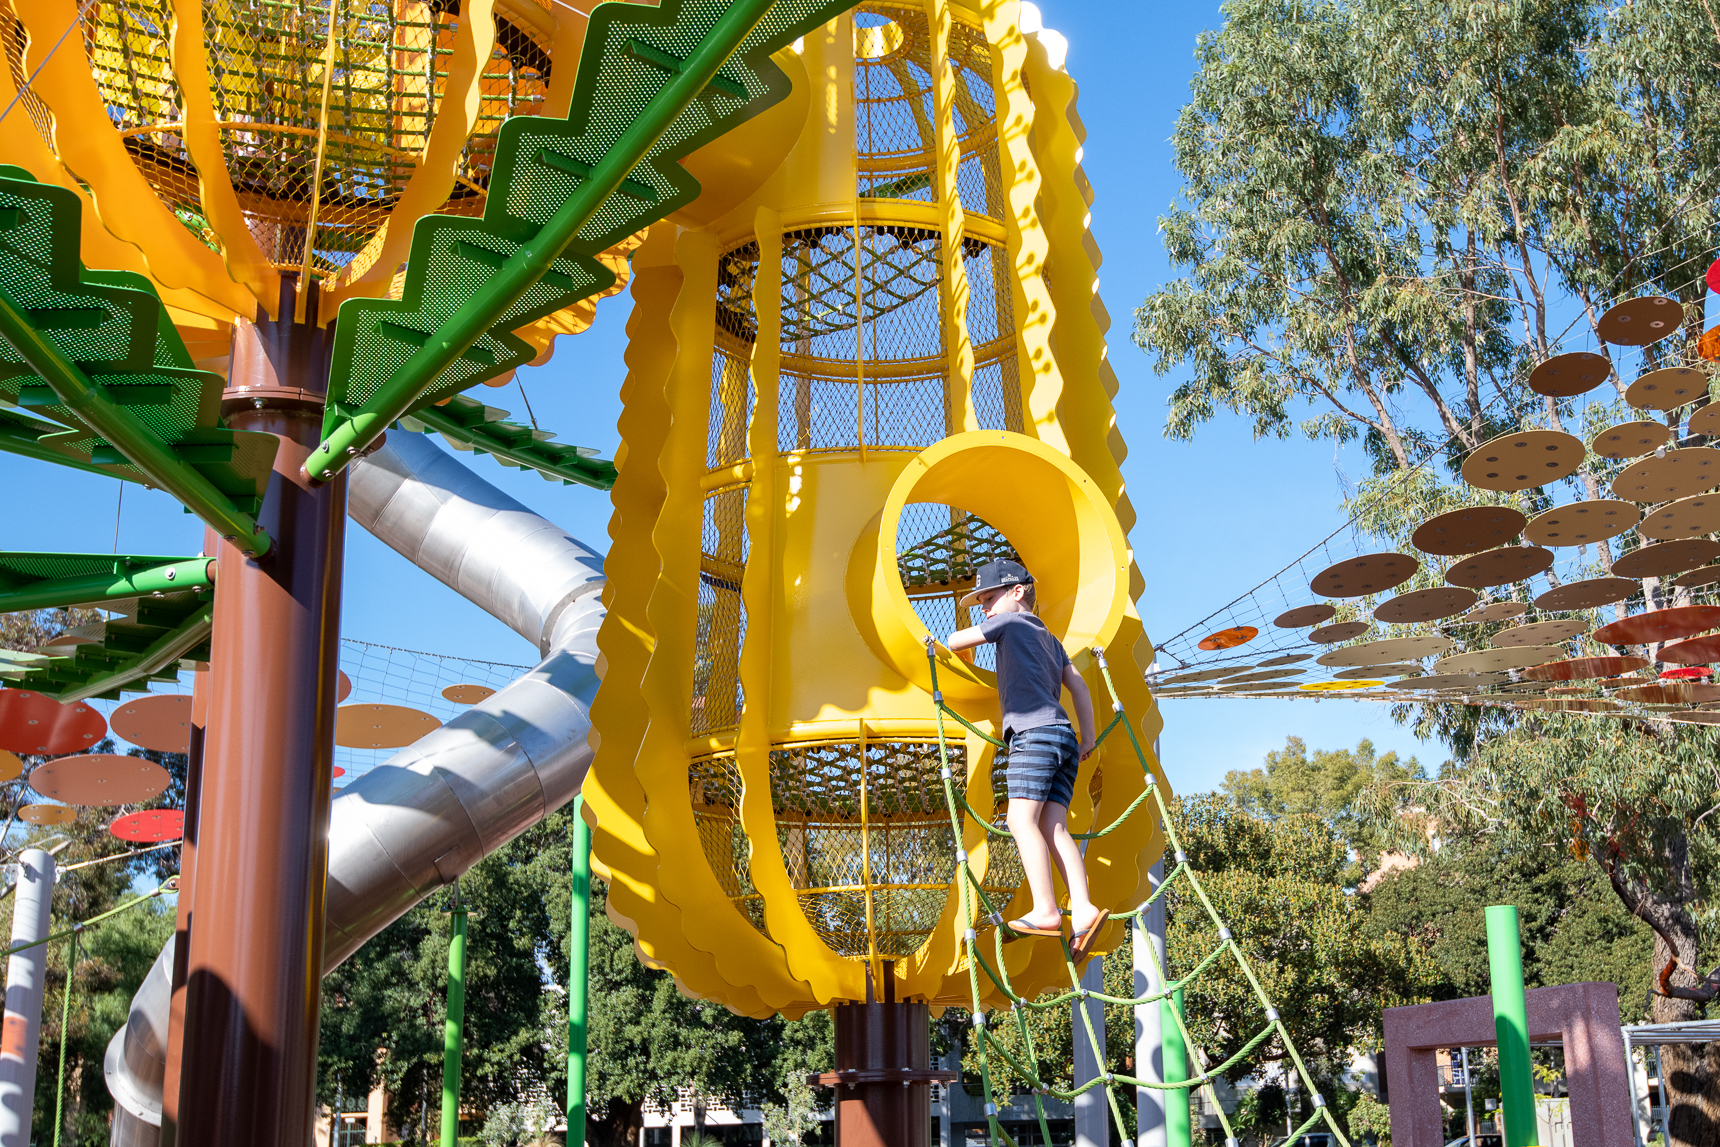 Wellington Square playground